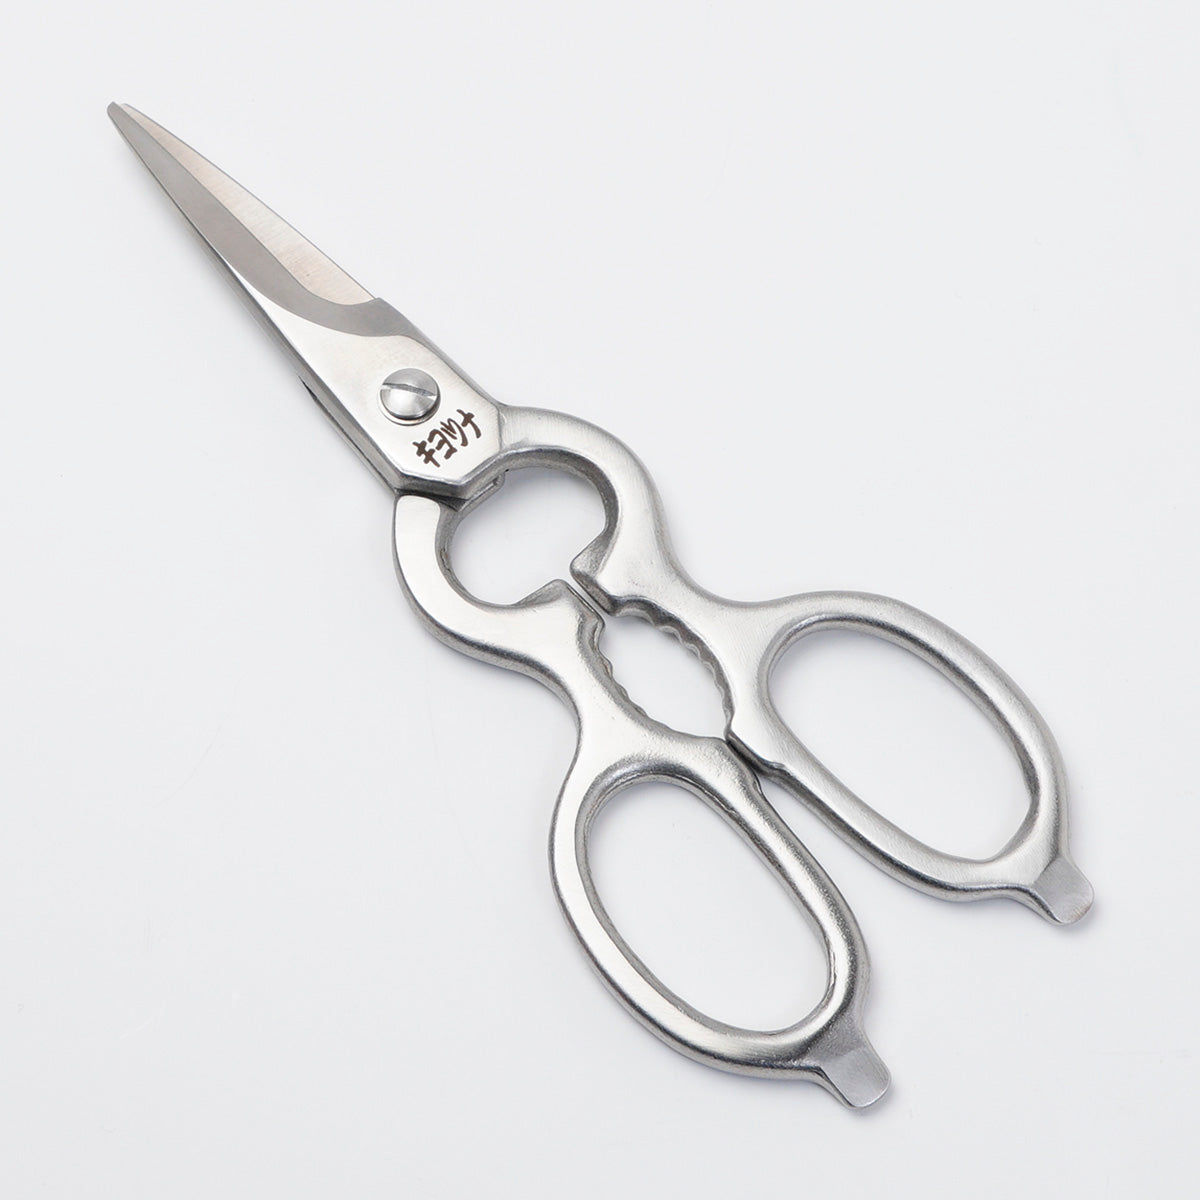 "KIYOTSUNA" Multifunctional Kitchen Scissors for Right Hander in Paper Box